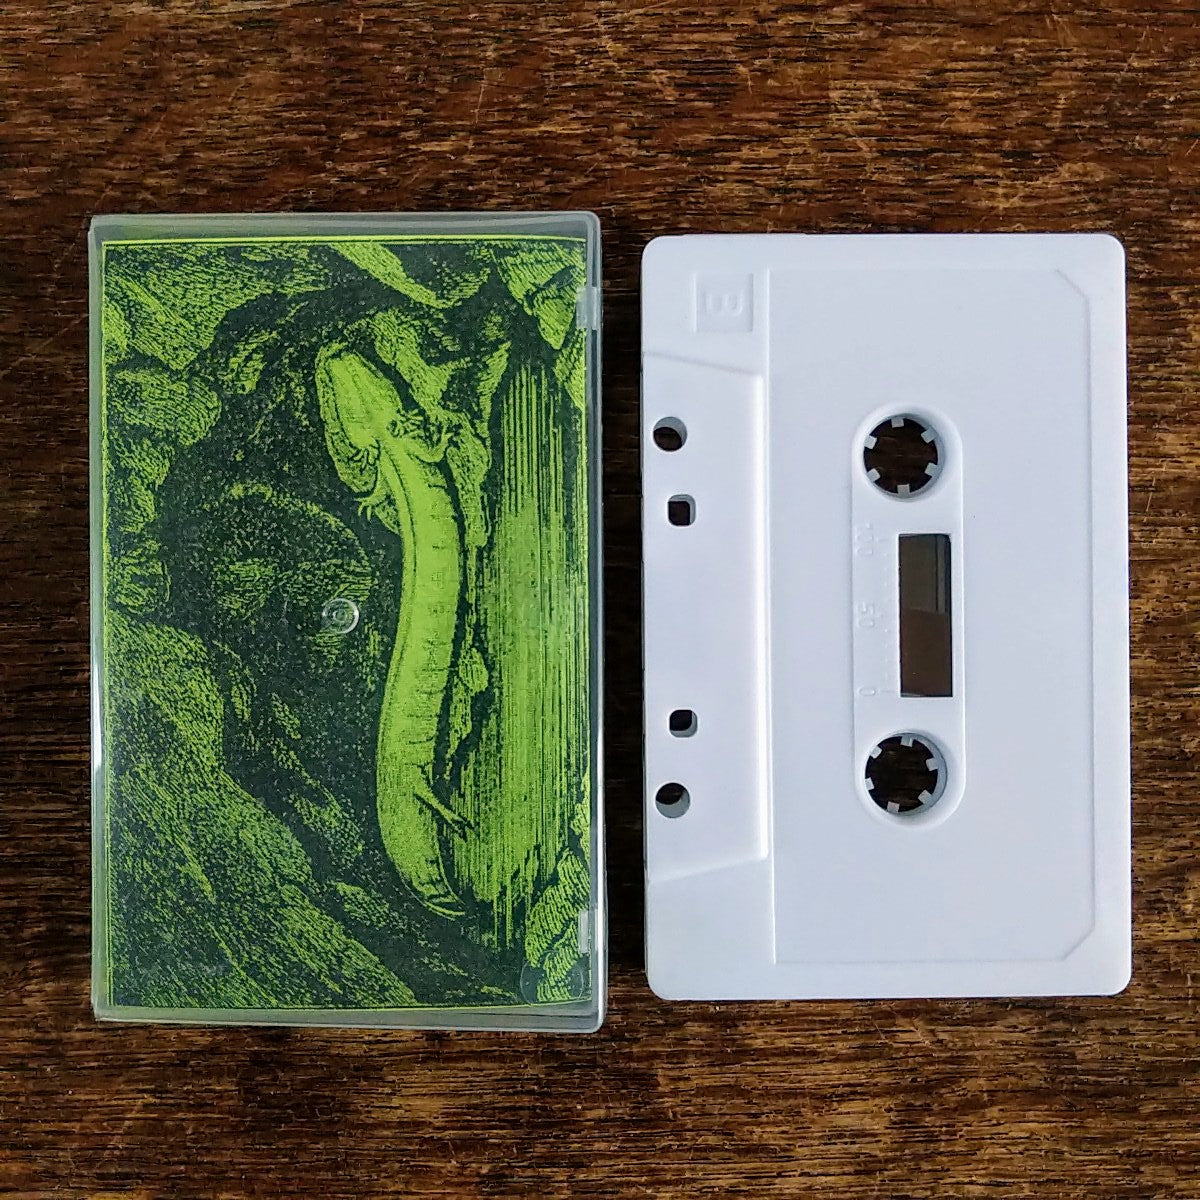 [SOLD OUT] OLD SPELLS "Blind Dragons" Cassette Tape